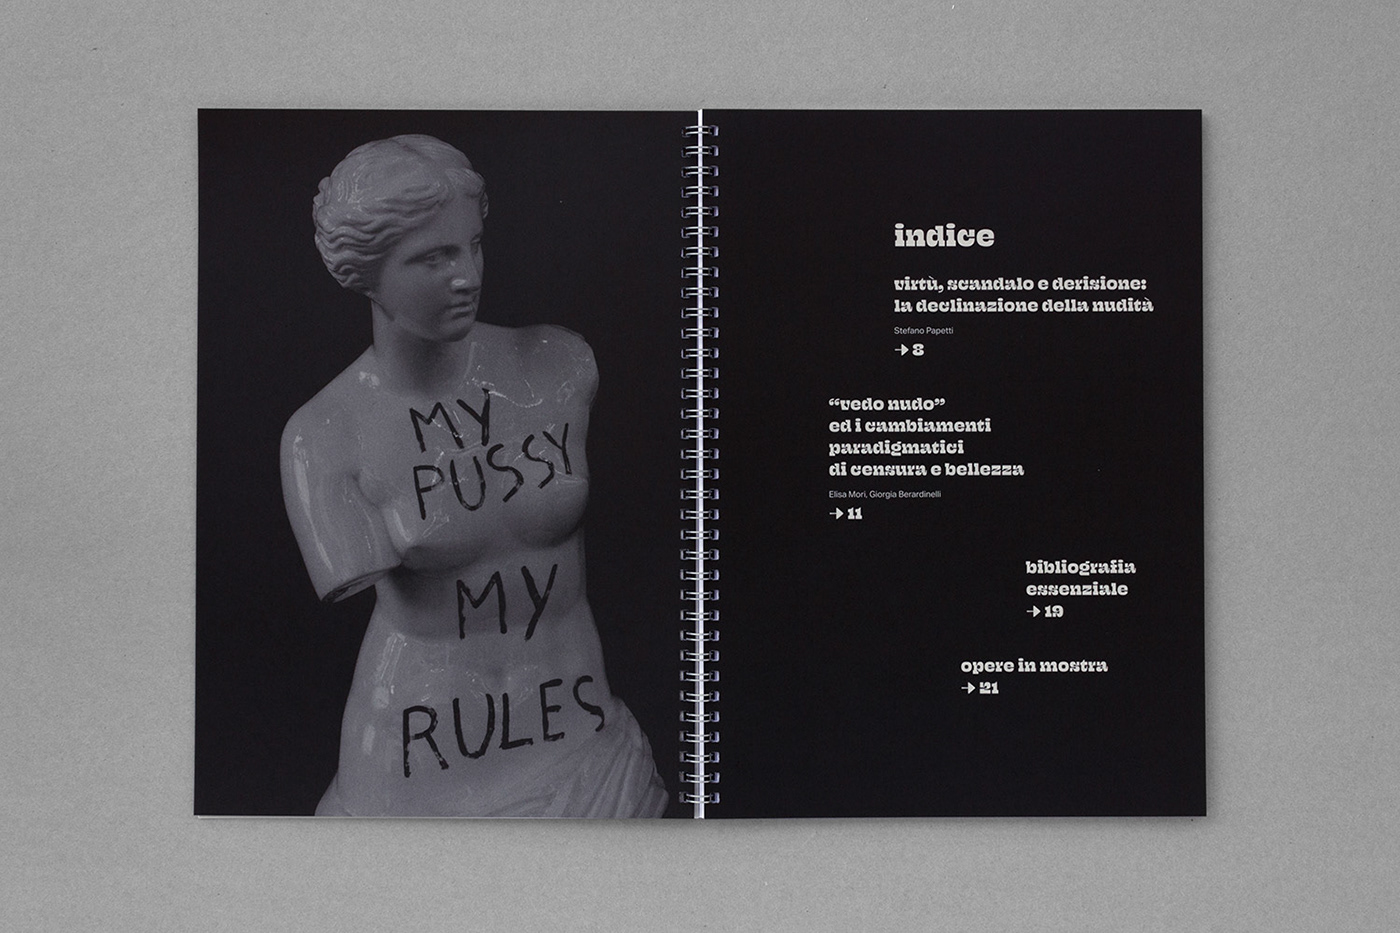 contemporary art Scratch Off vedo nudo palazzina azzurra arte contemporanea Catalogue seduzione censura seduction Censorship